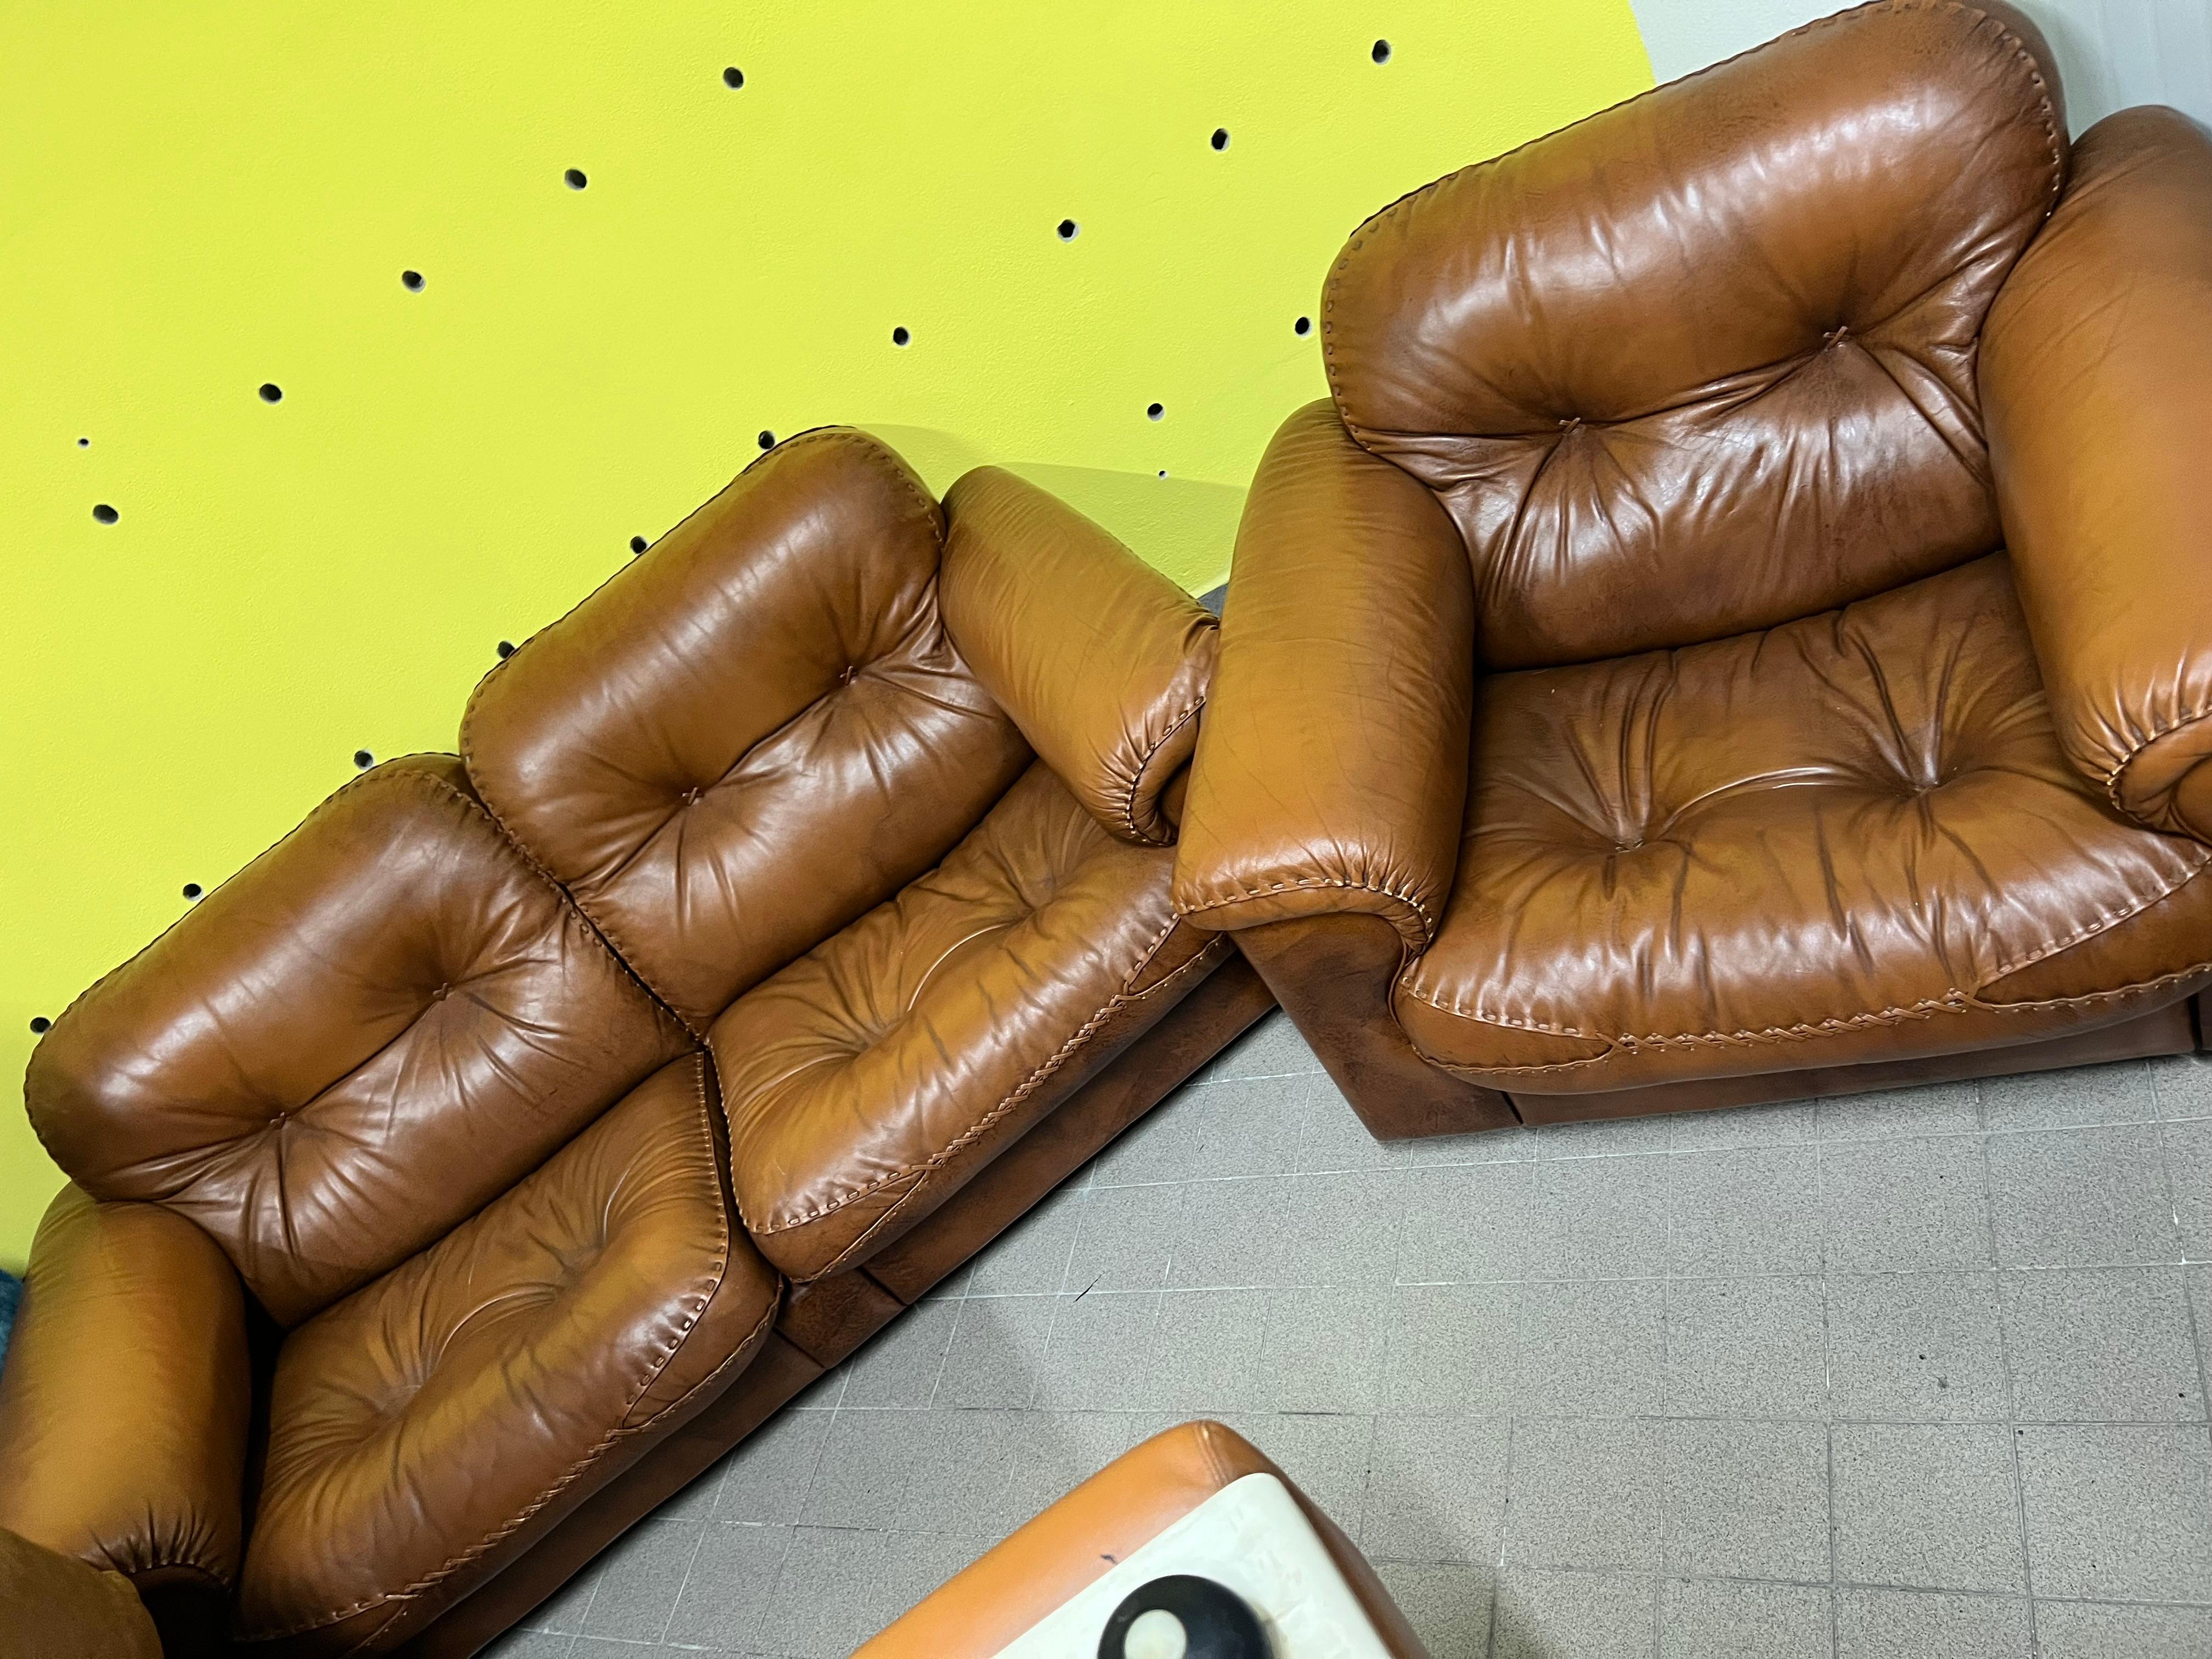 Sofa and armachair de sede original vintage perfect condition 
1 sofà 
1 armchair.